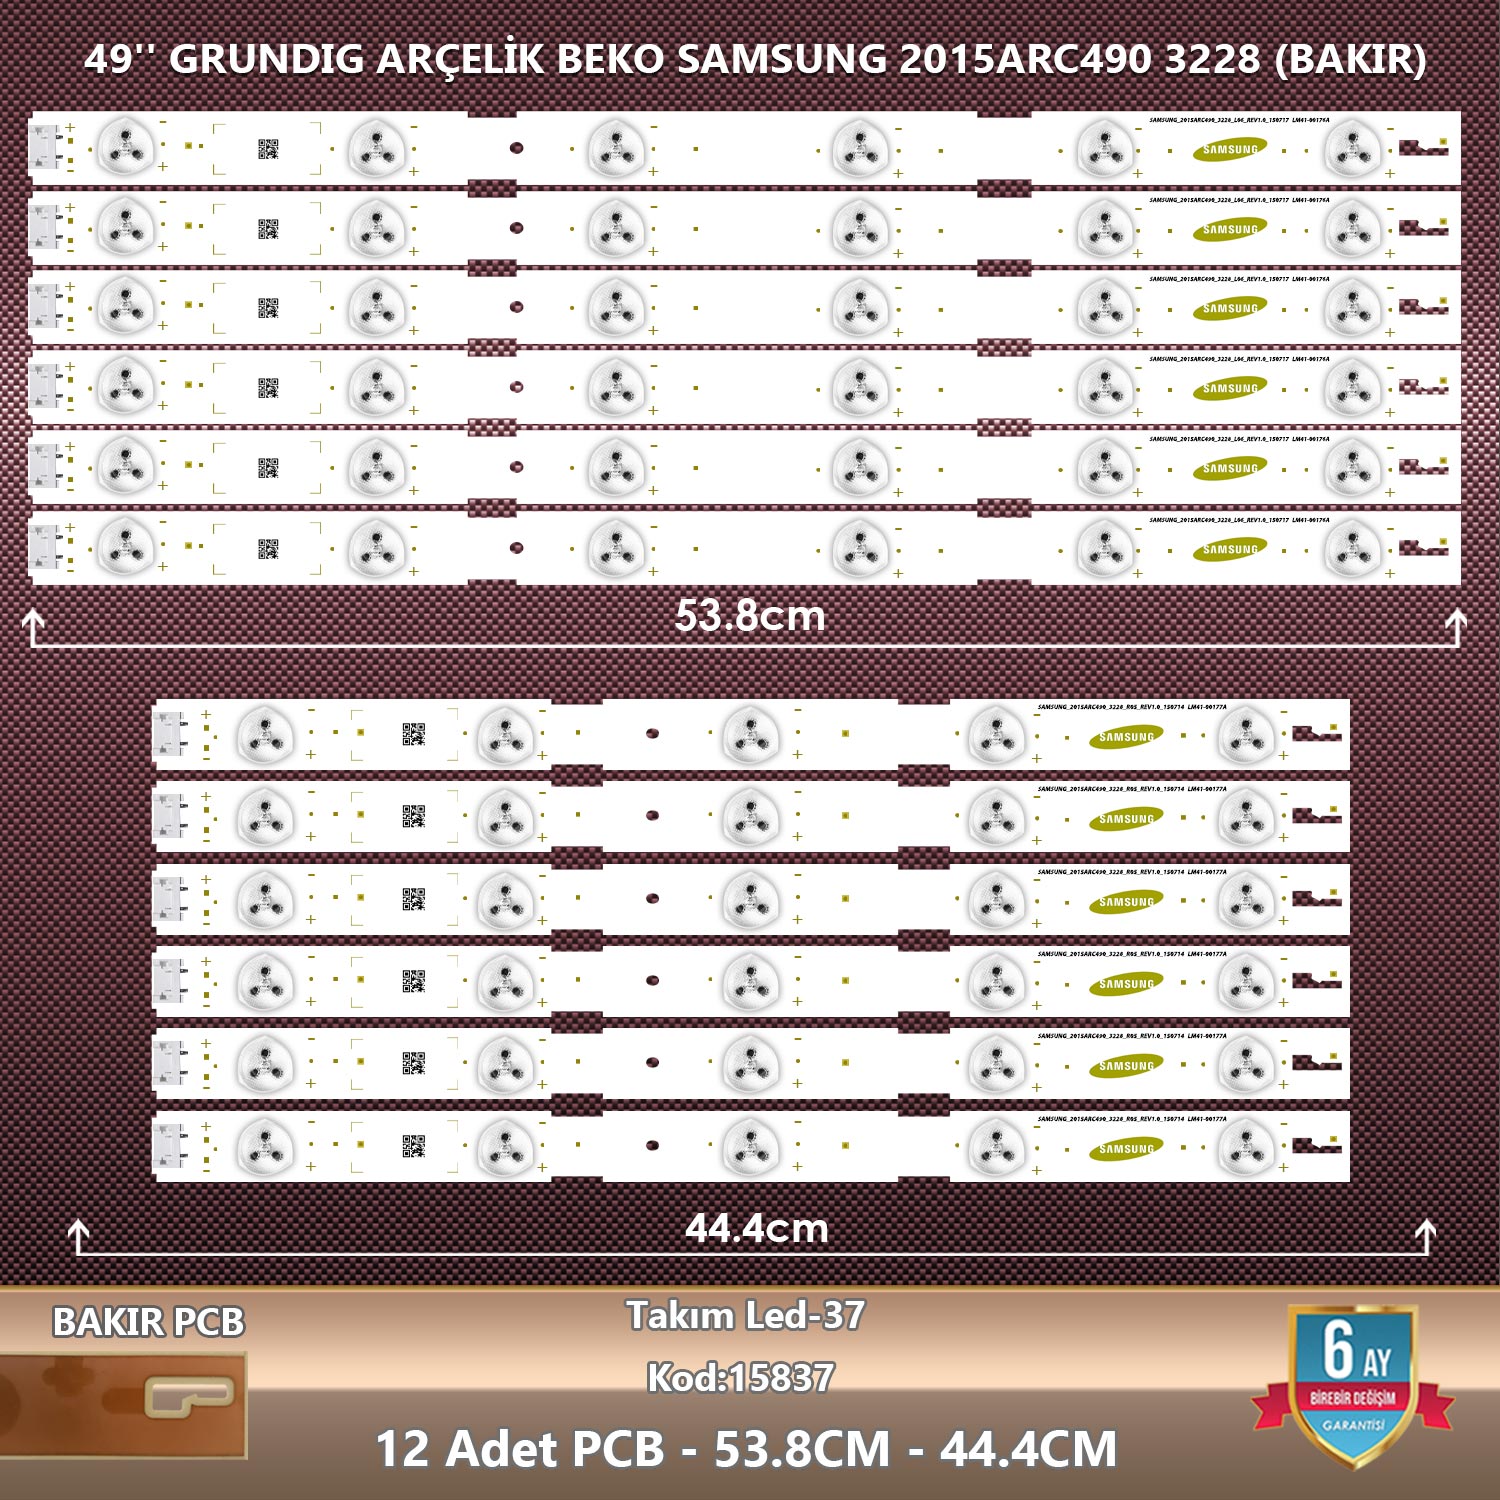 ÇIKMA TAKIM LED-37 (6X6PCB) 49 GRUNDIG ARÇELİK BEKO SAMSUNG 2015ARC490 3228